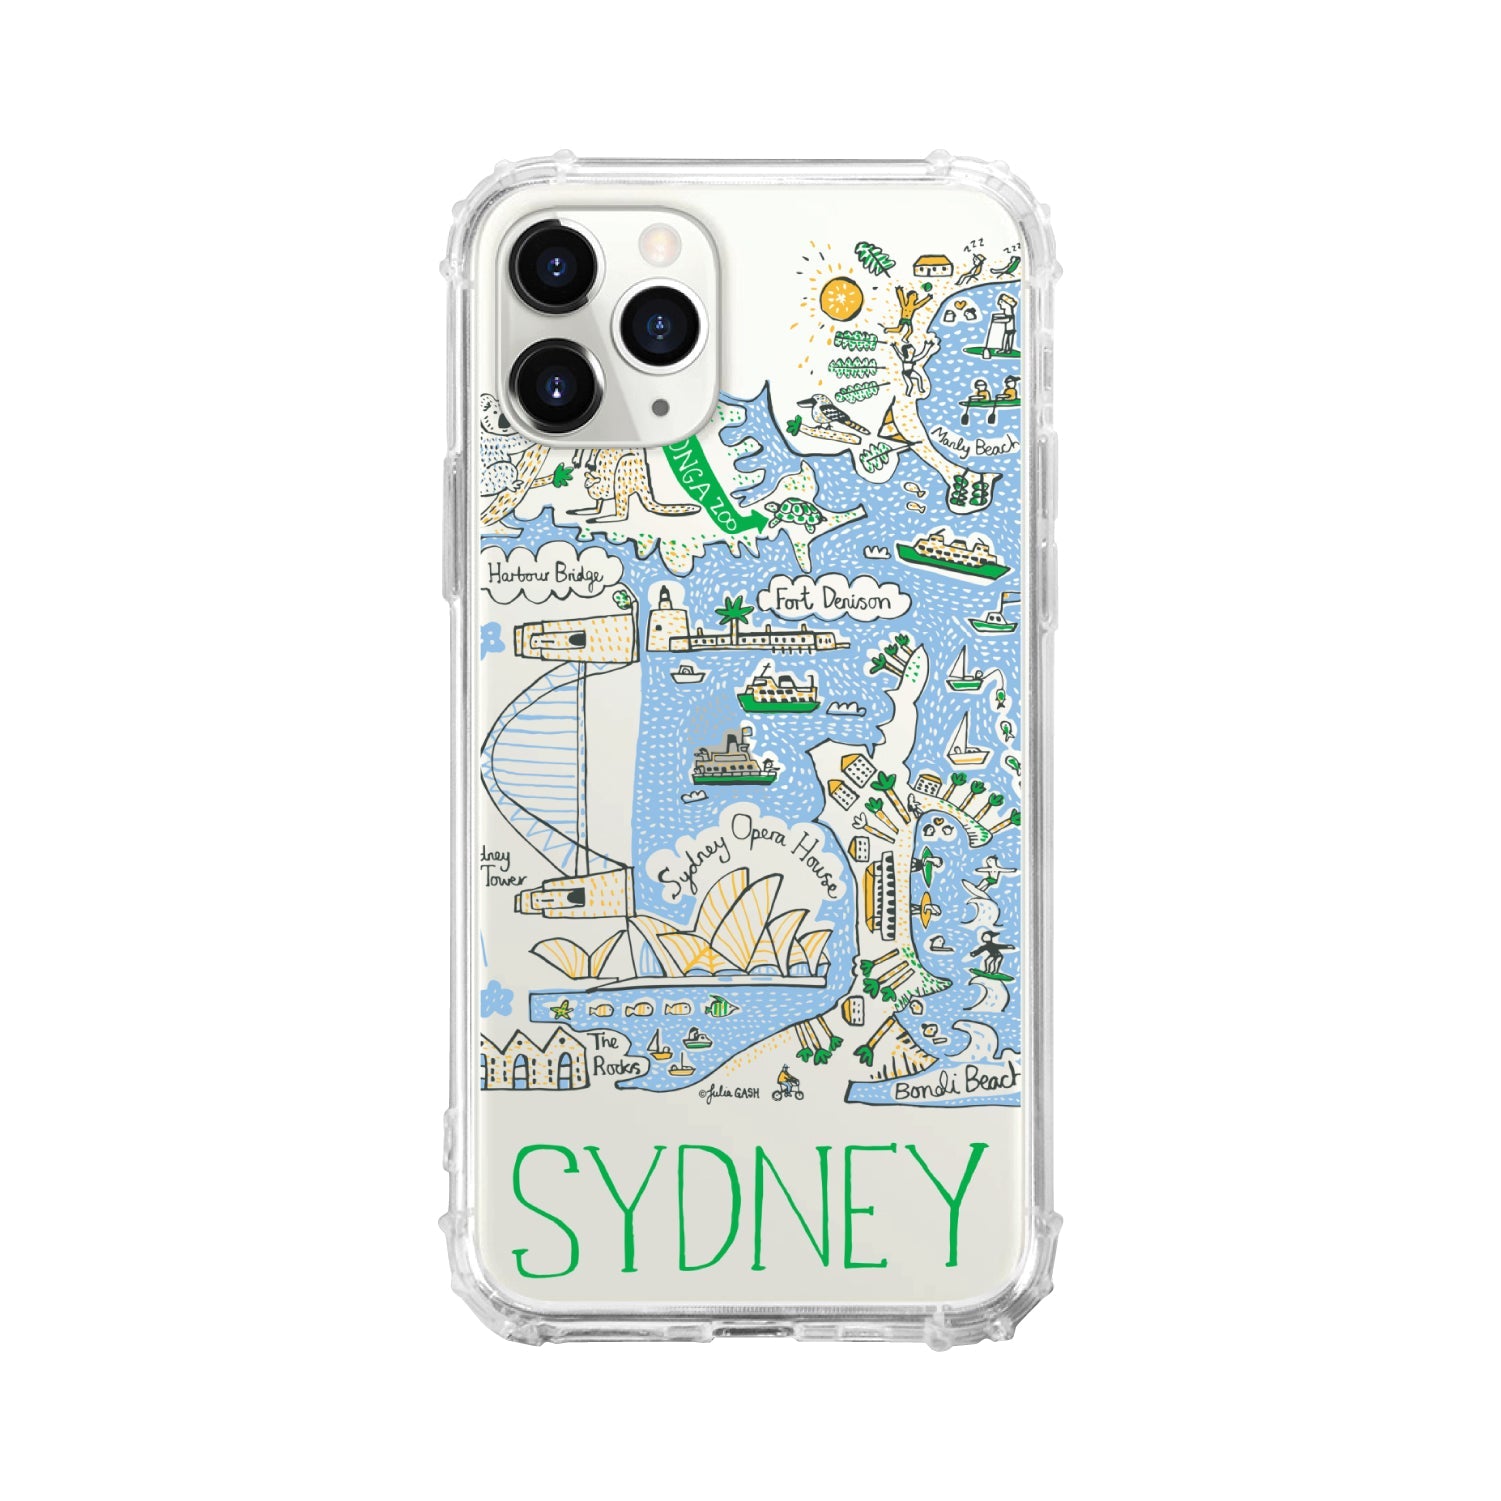 Bondi Beach | Eco-friendly iPhone XS Max case